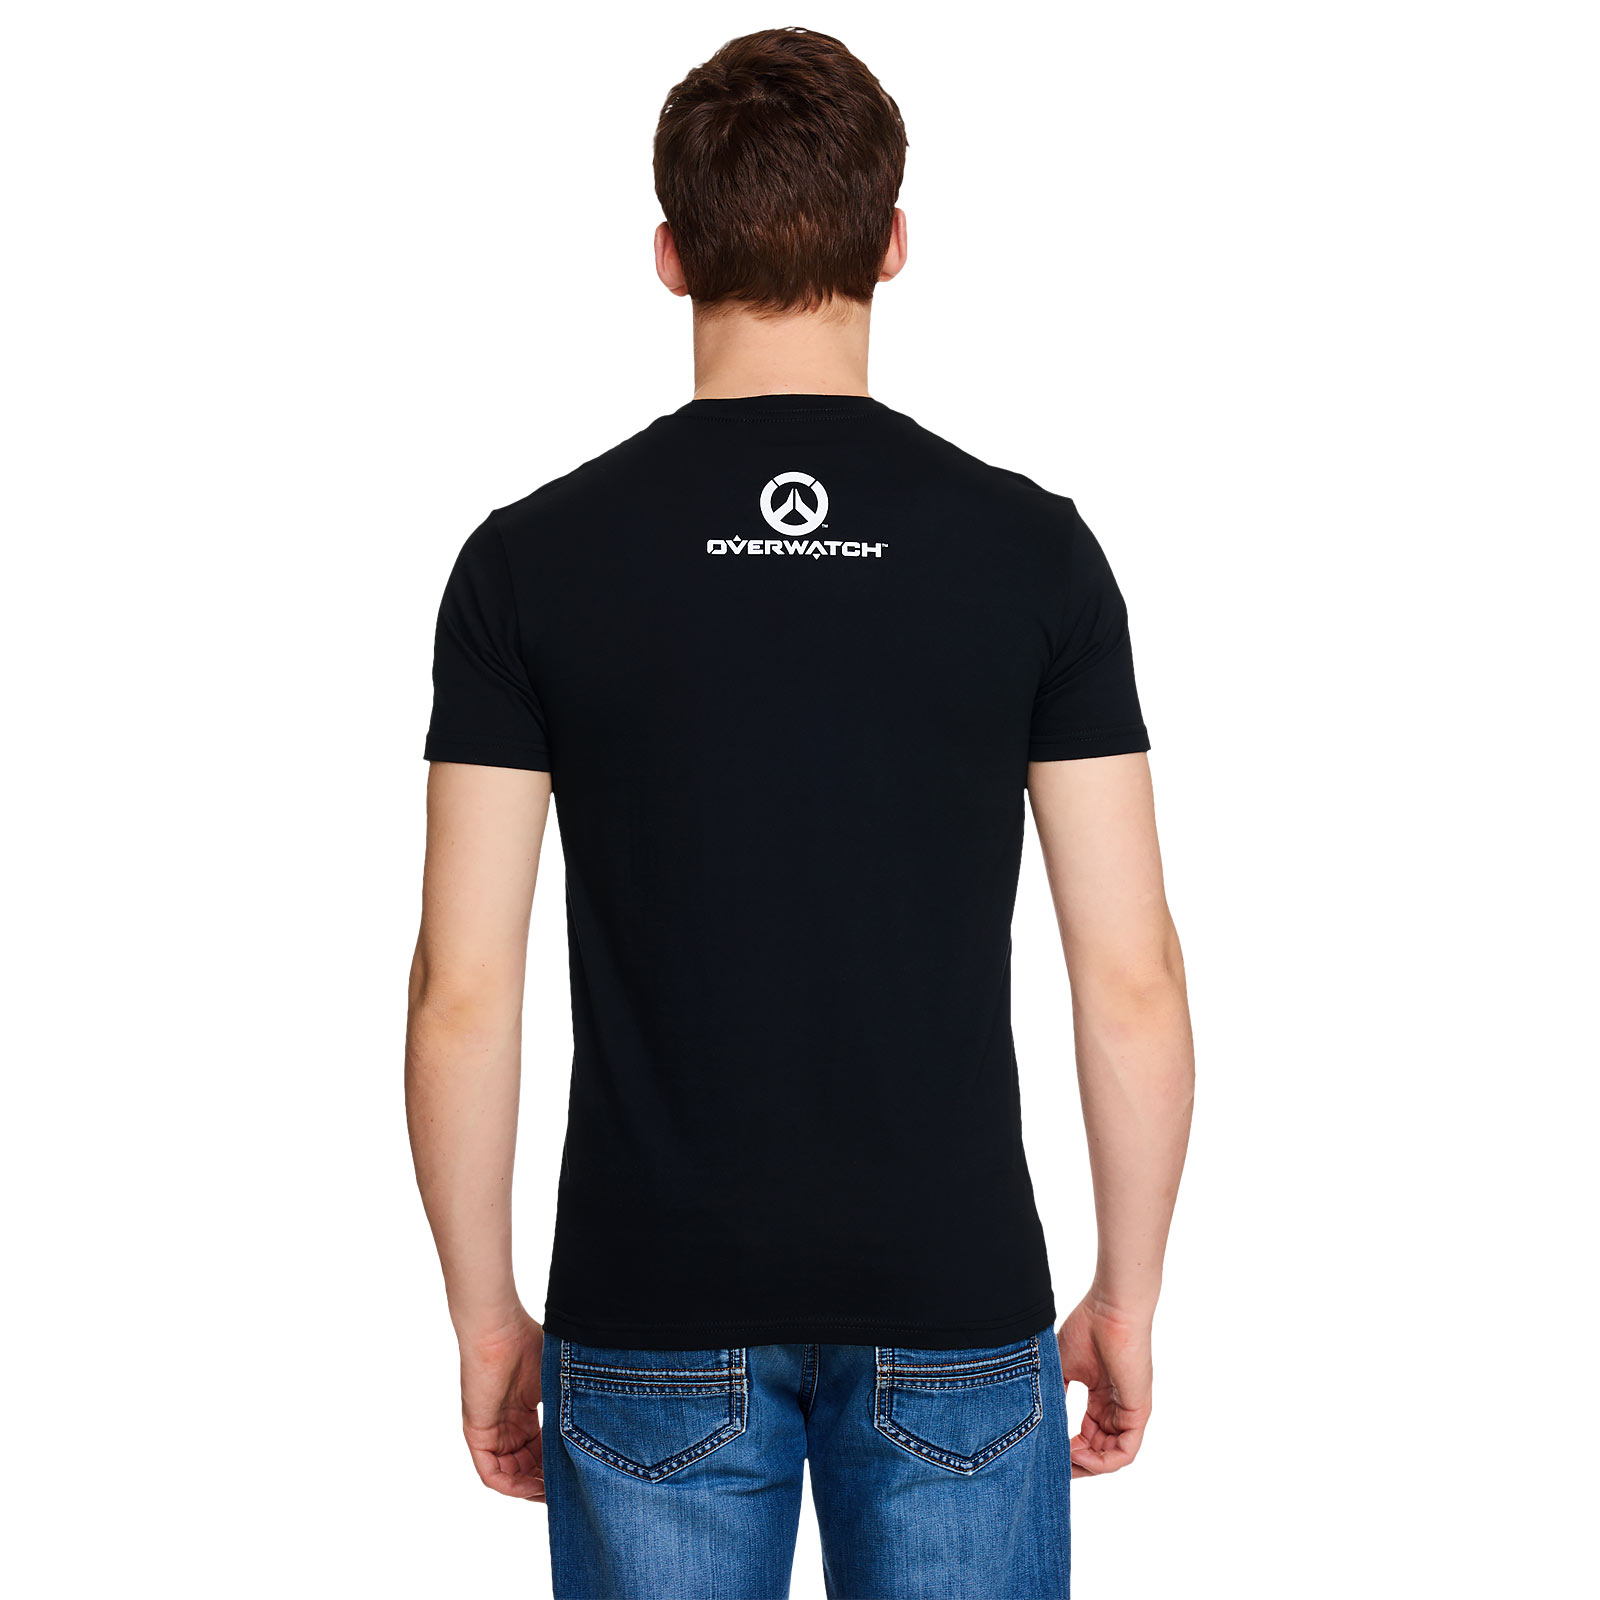 Overwatch - T-shirt noir avec logo Tracer Spray